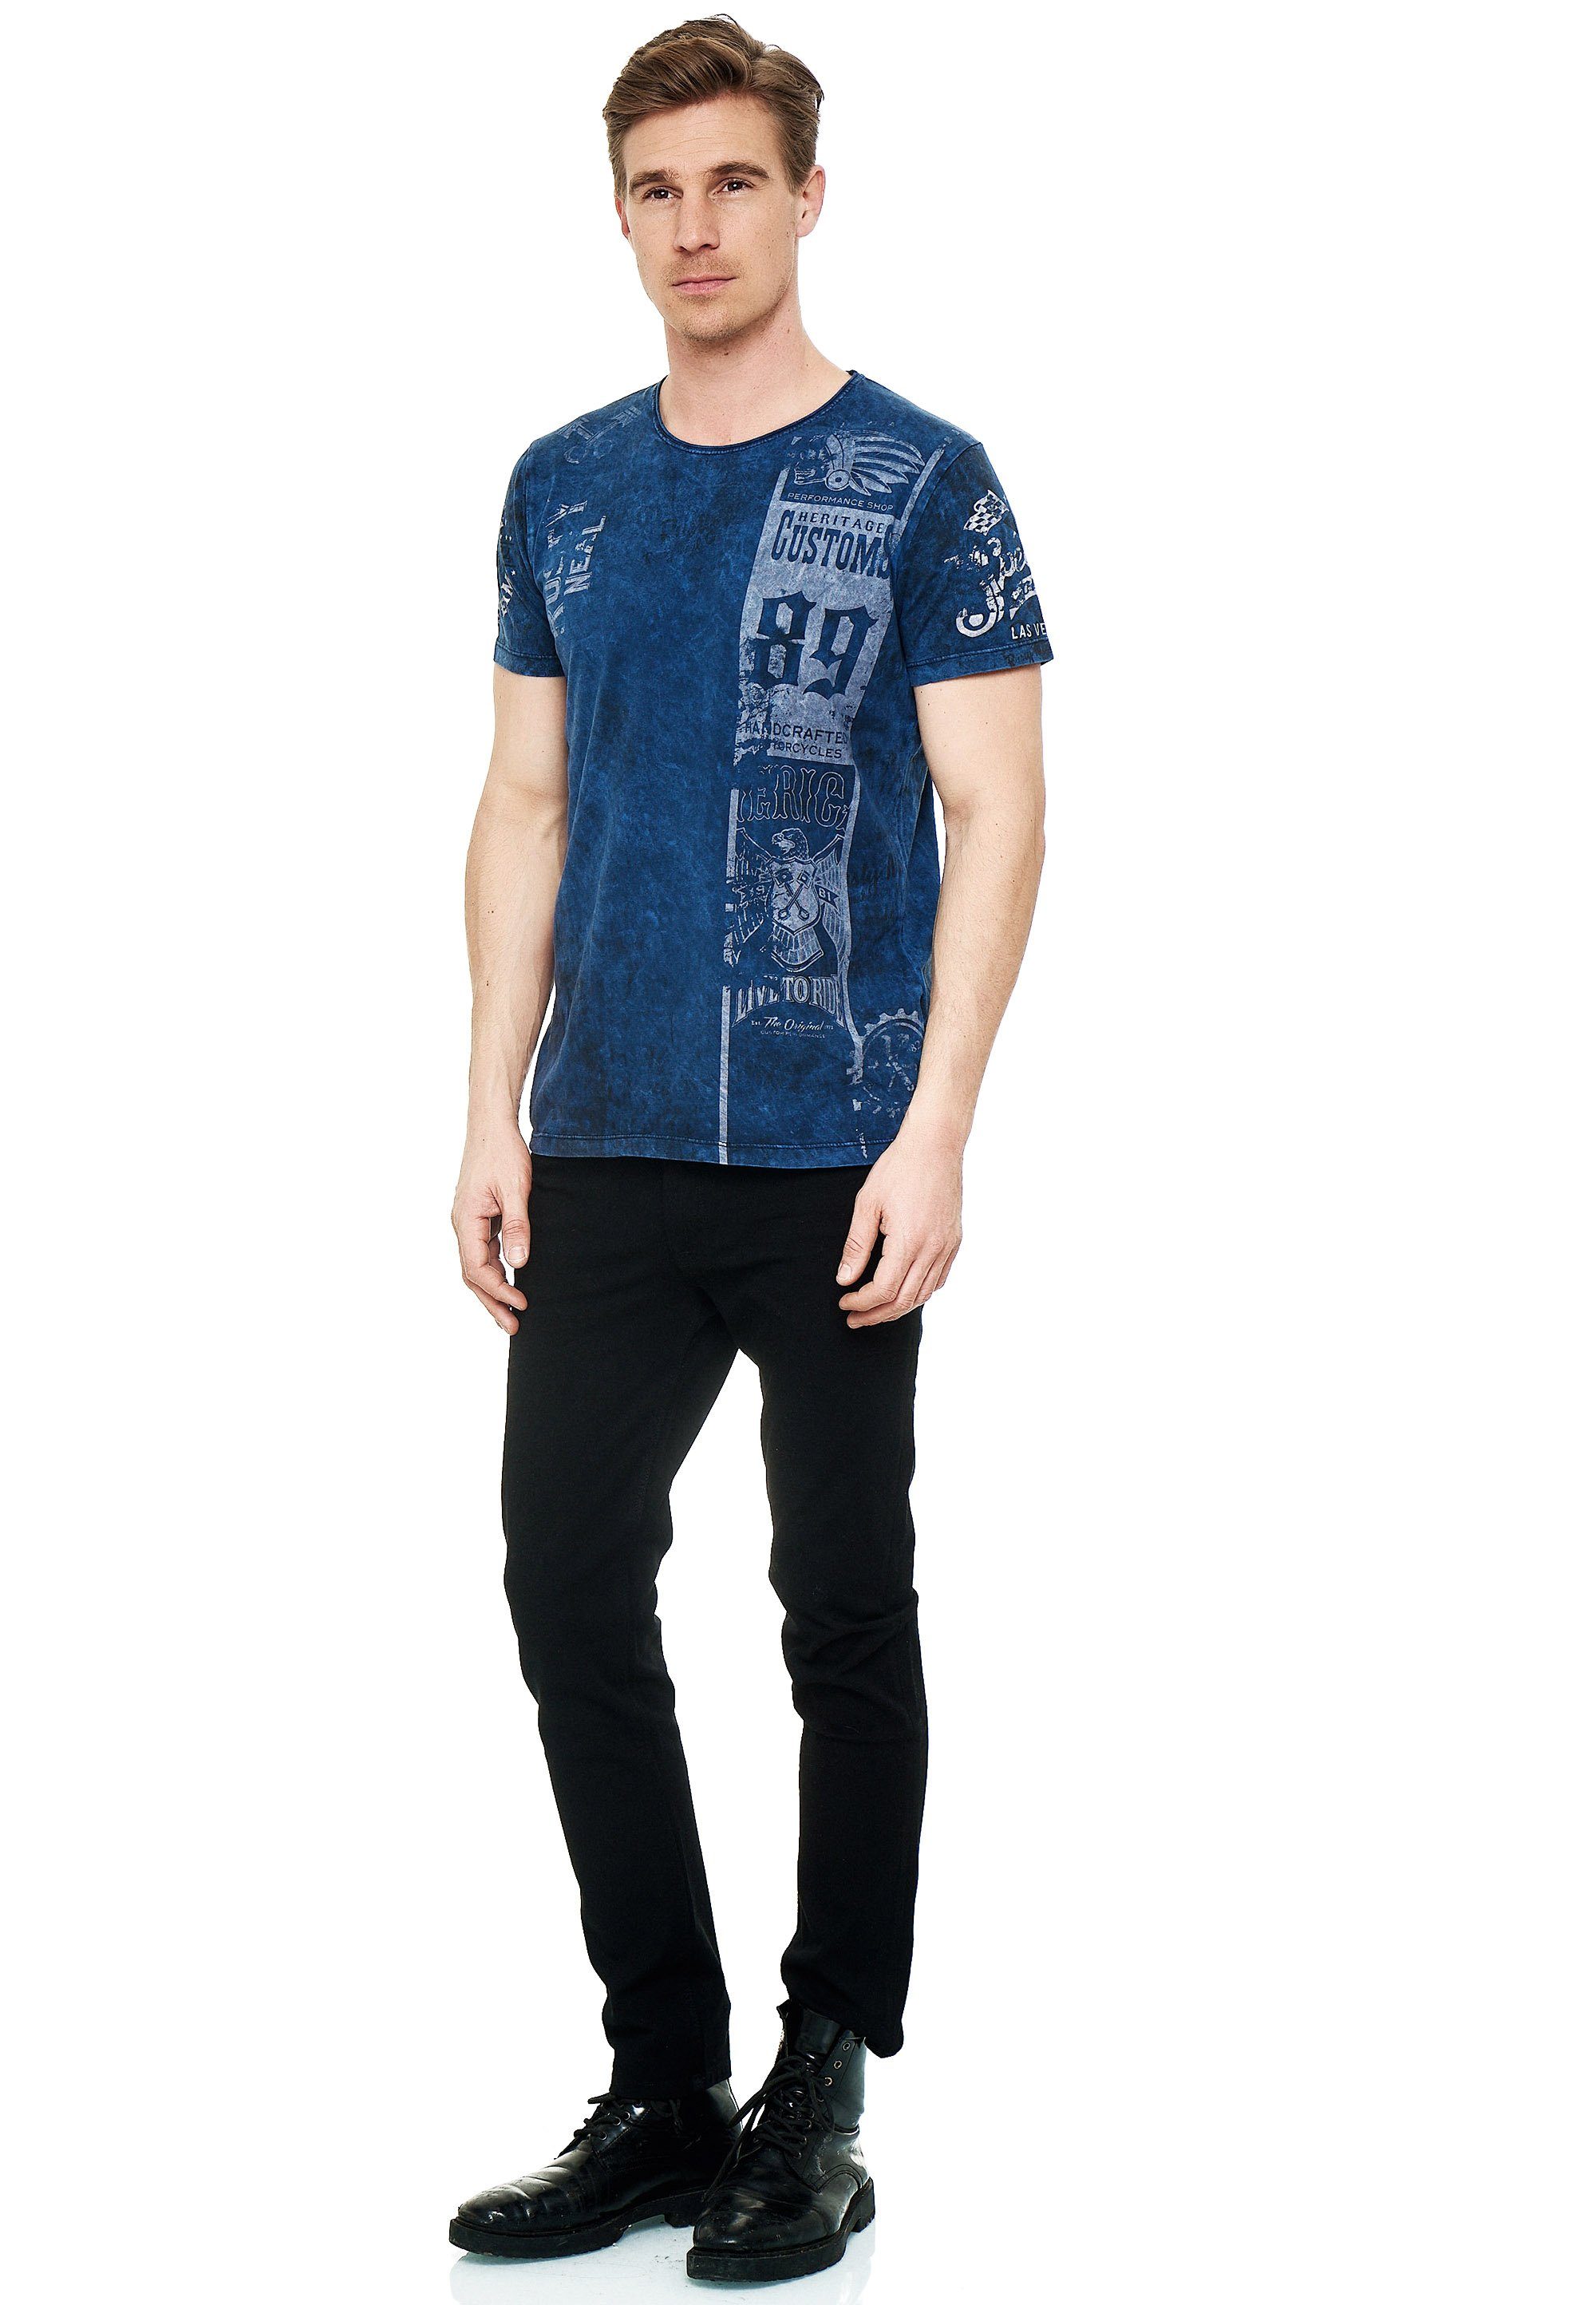 modernem Print T-Shirt Neal dunkelblau-weiß Rusty mit